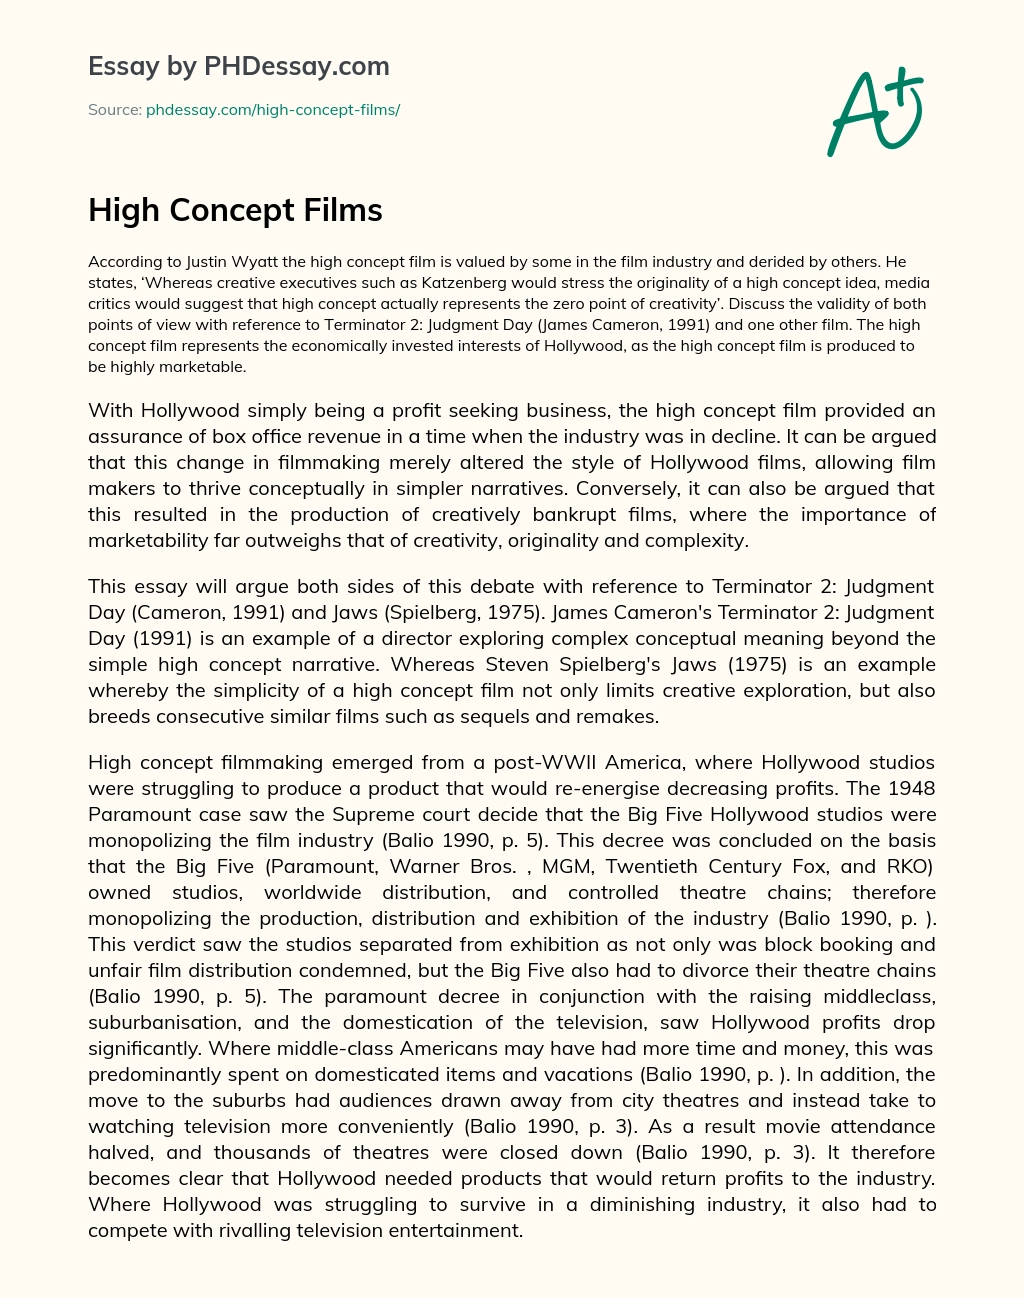 High Concept Films essay